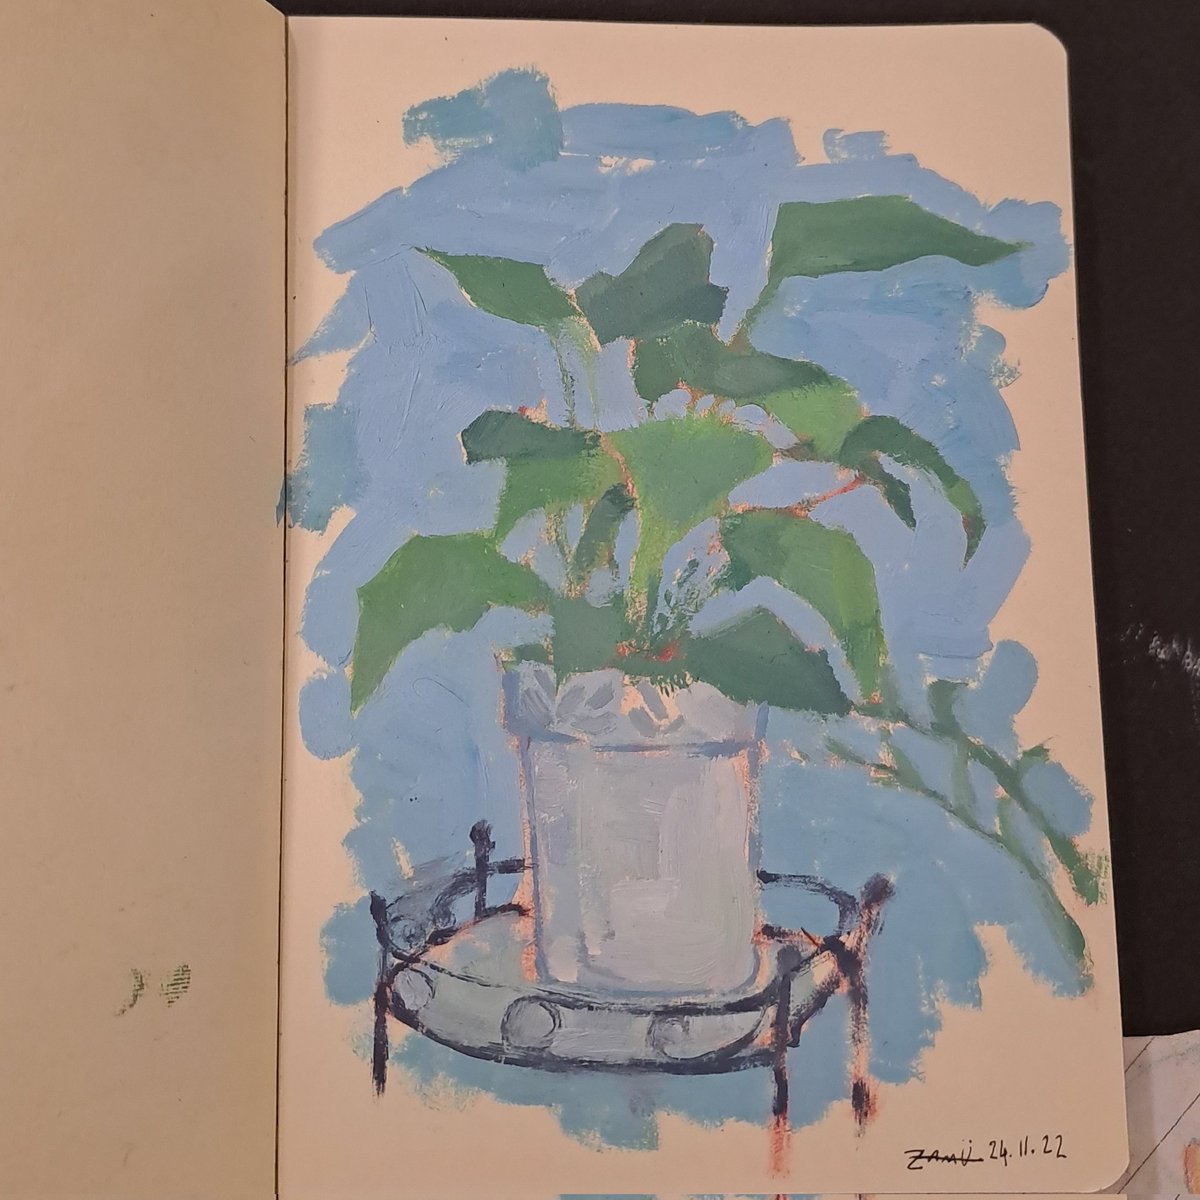 Tiny  sketchbook paintings 🥹
#art #artist #ArtistOnTwitter #paintings #sketches #sketchbook #A6 #oilpainting #plantpainting #illustration #desk #caneyo #peristeronicart